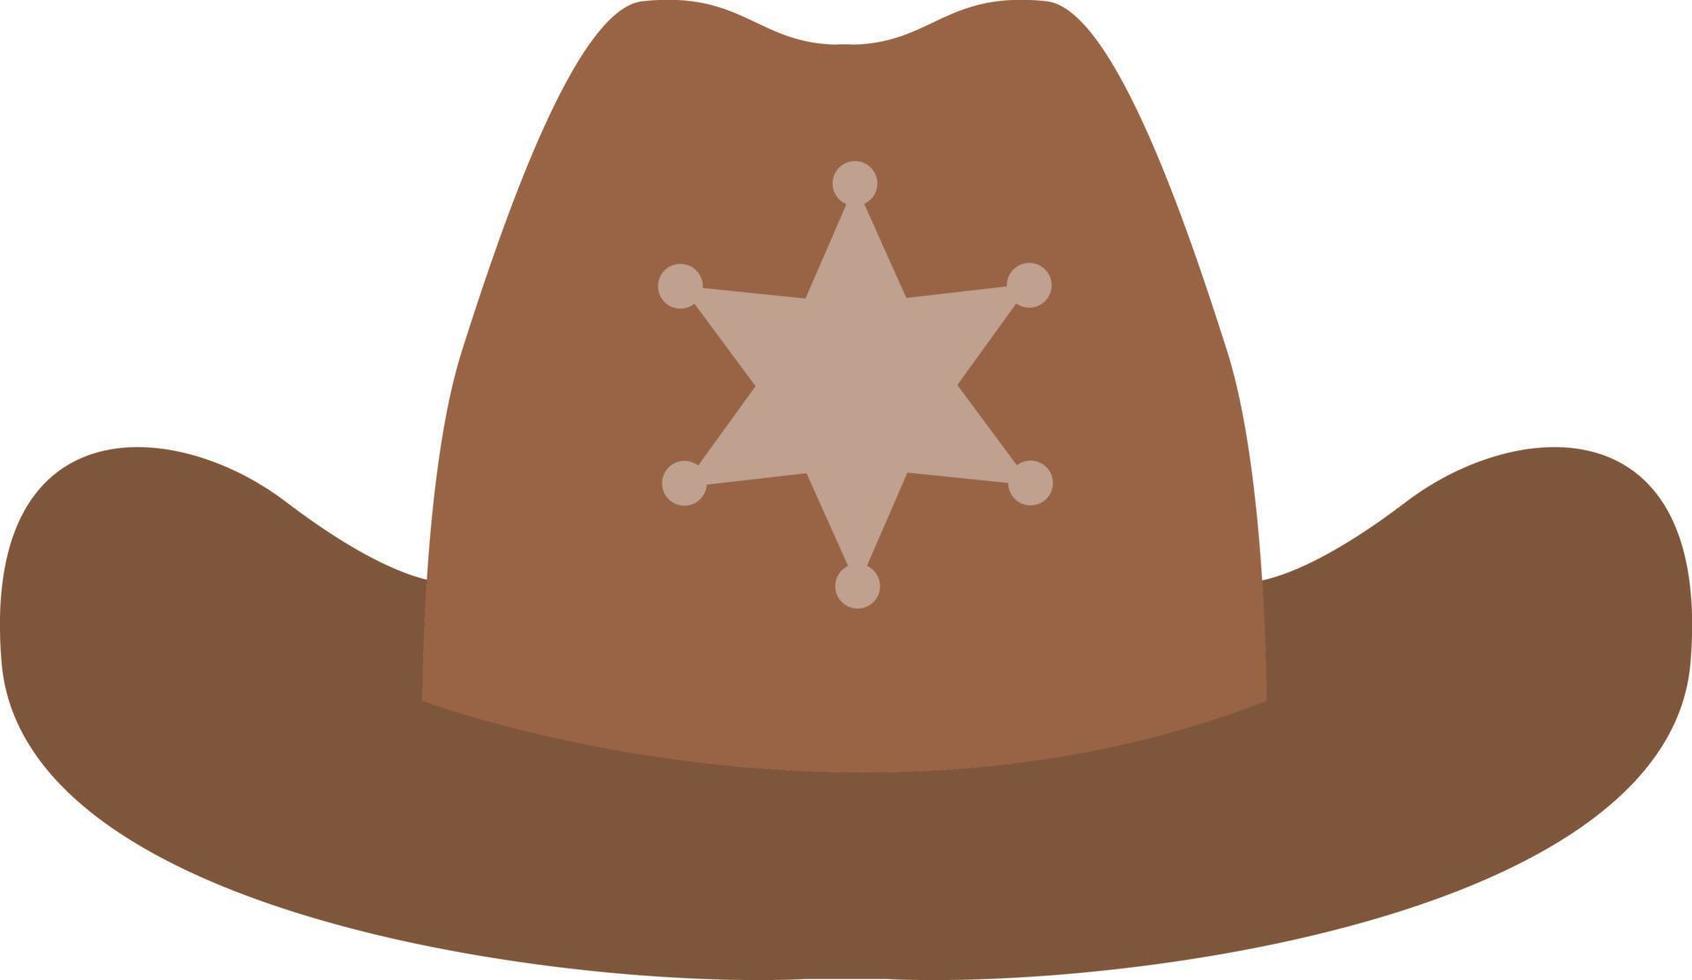 sheriffs hoed, illustratie, vector Aan wit achtergrond.v